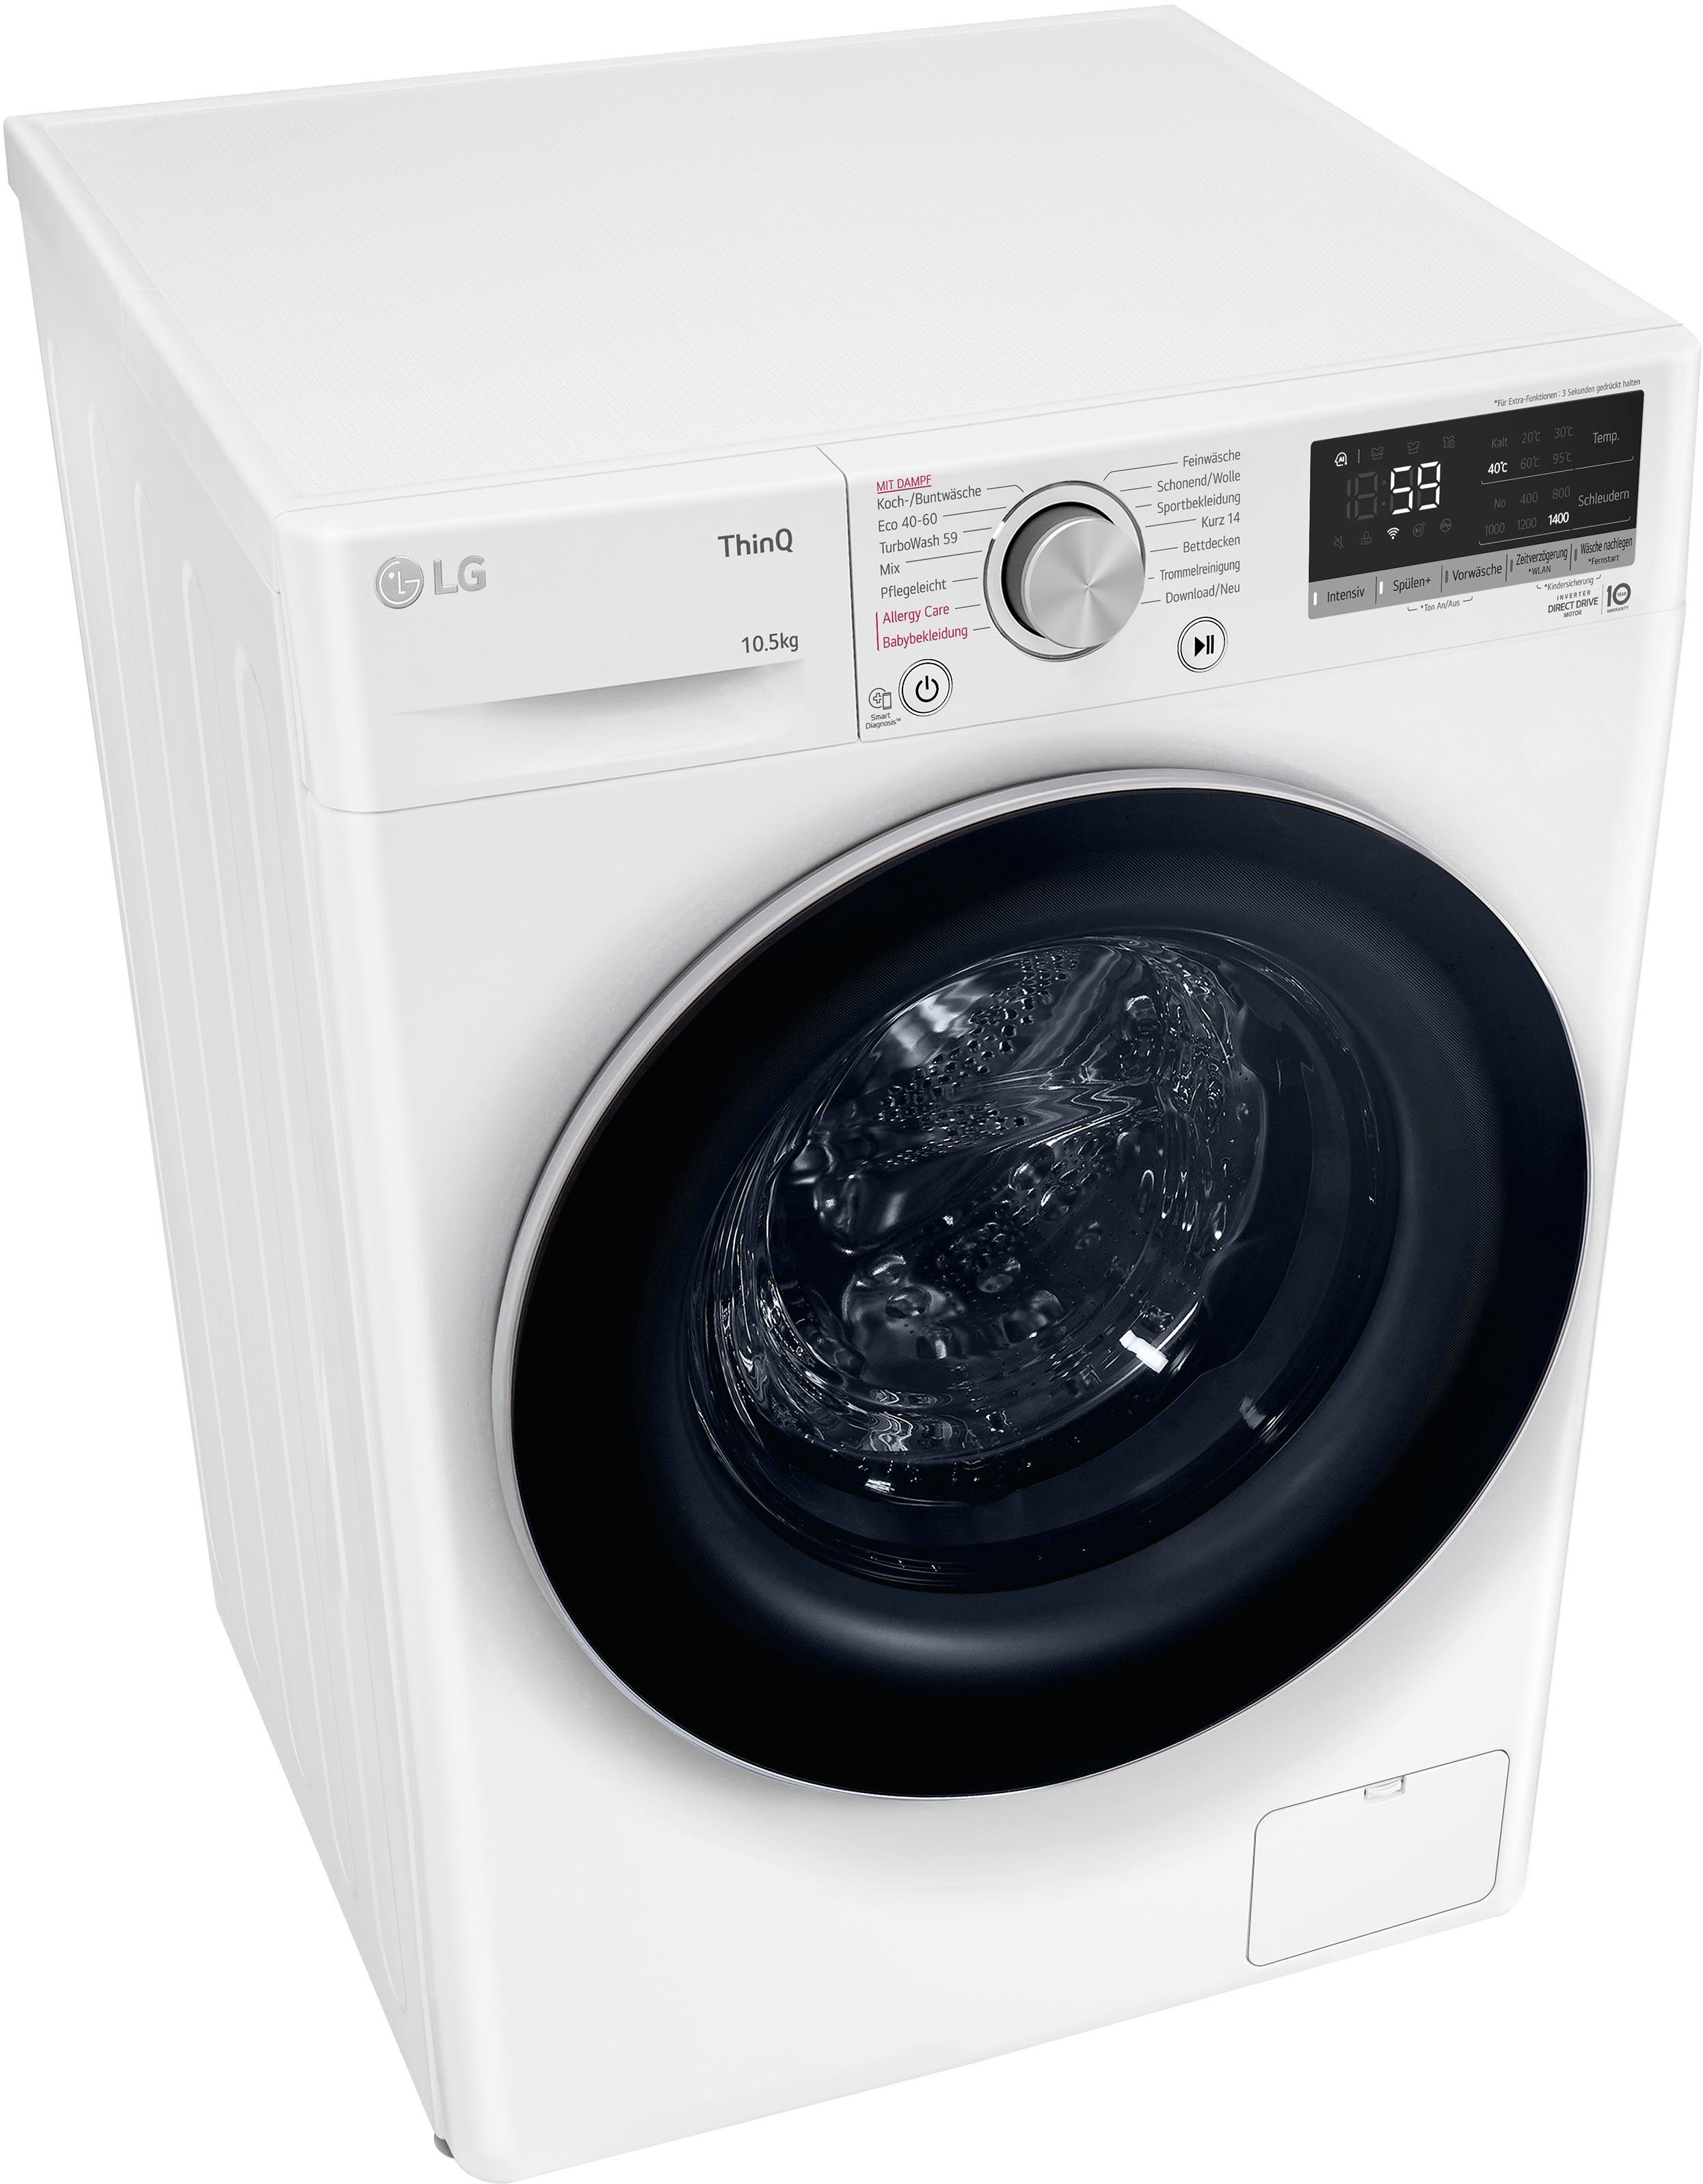 LG Waschmaschine F4WV70X1, 10,5 U/min 1400 kg